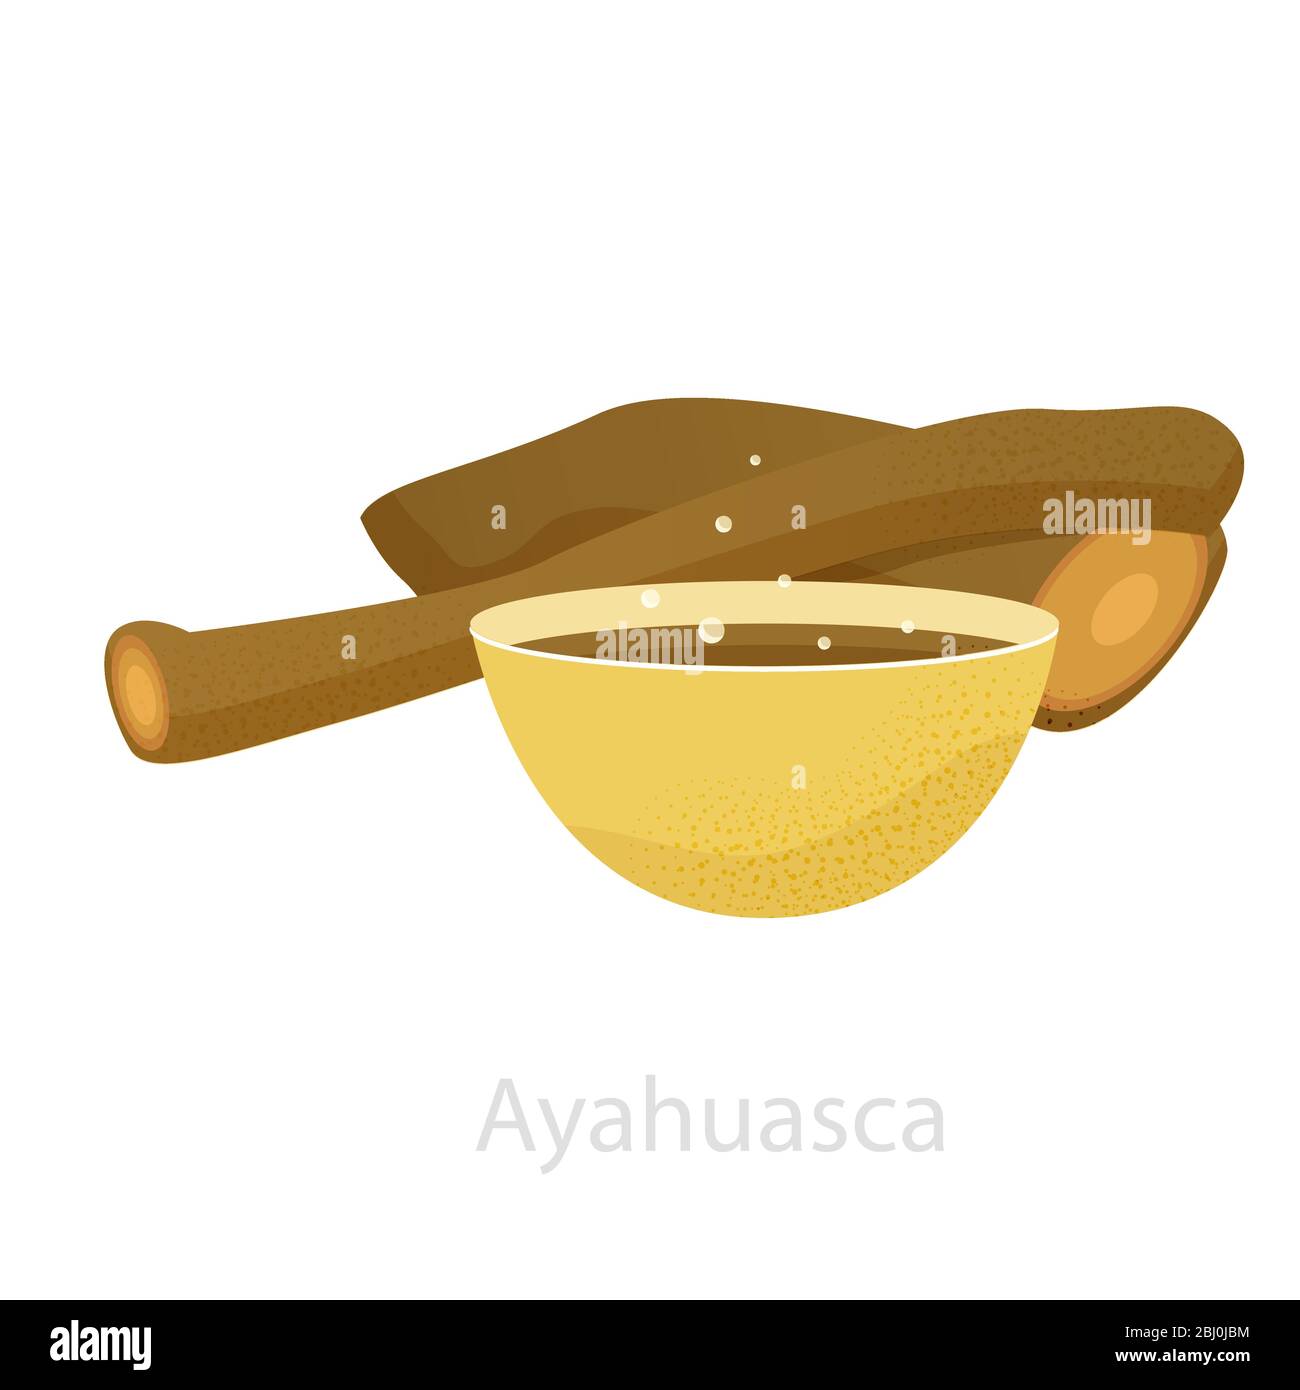 Ayahuasca liana with tea, decoction already prepared from it. Stock Vector